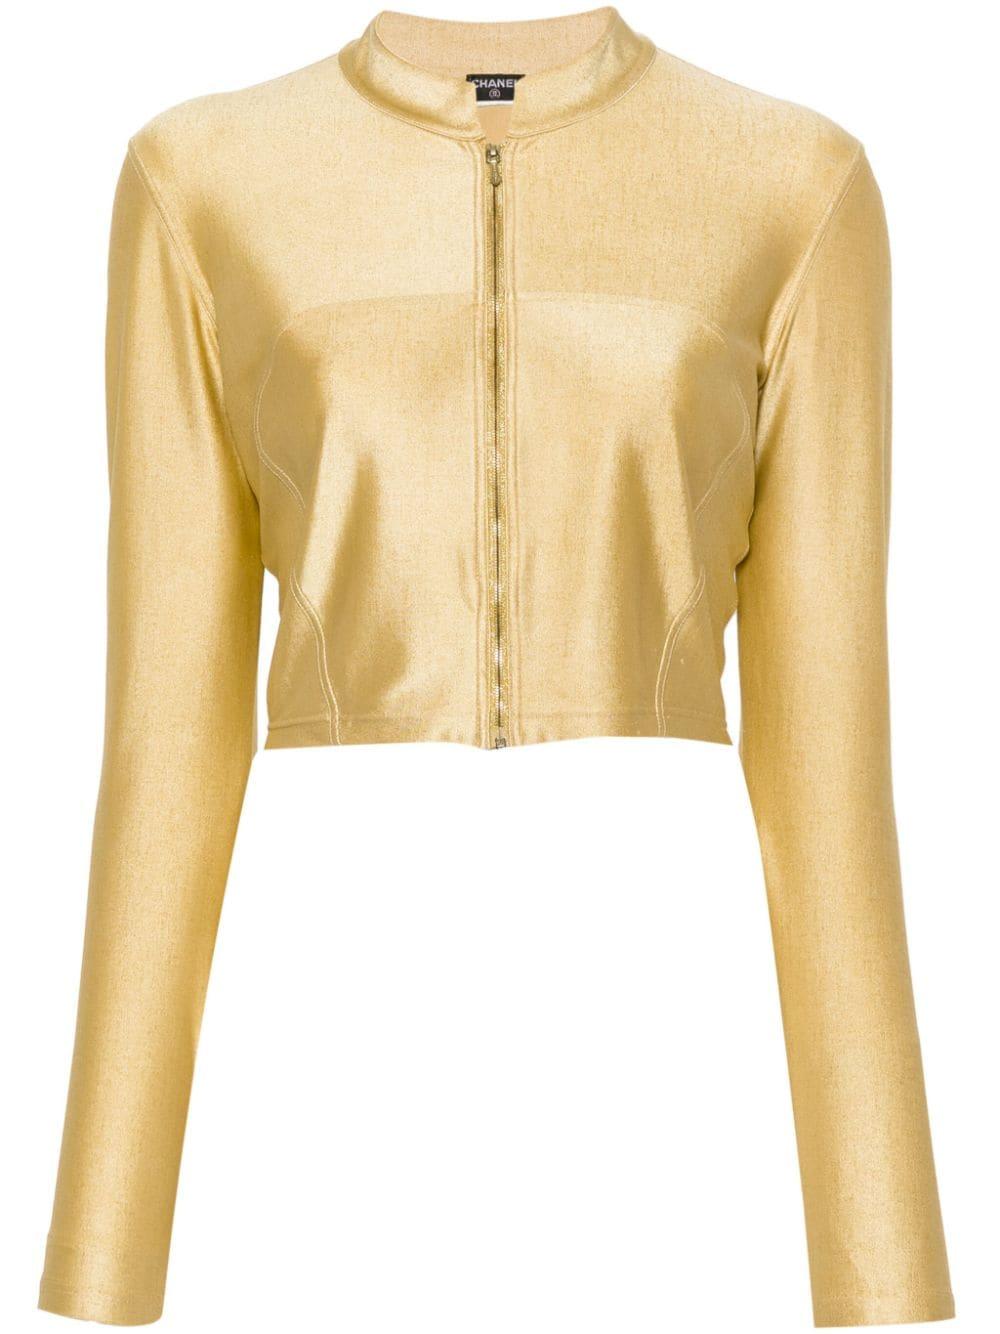  Chanel - Veste courte en métal doré en vente 2